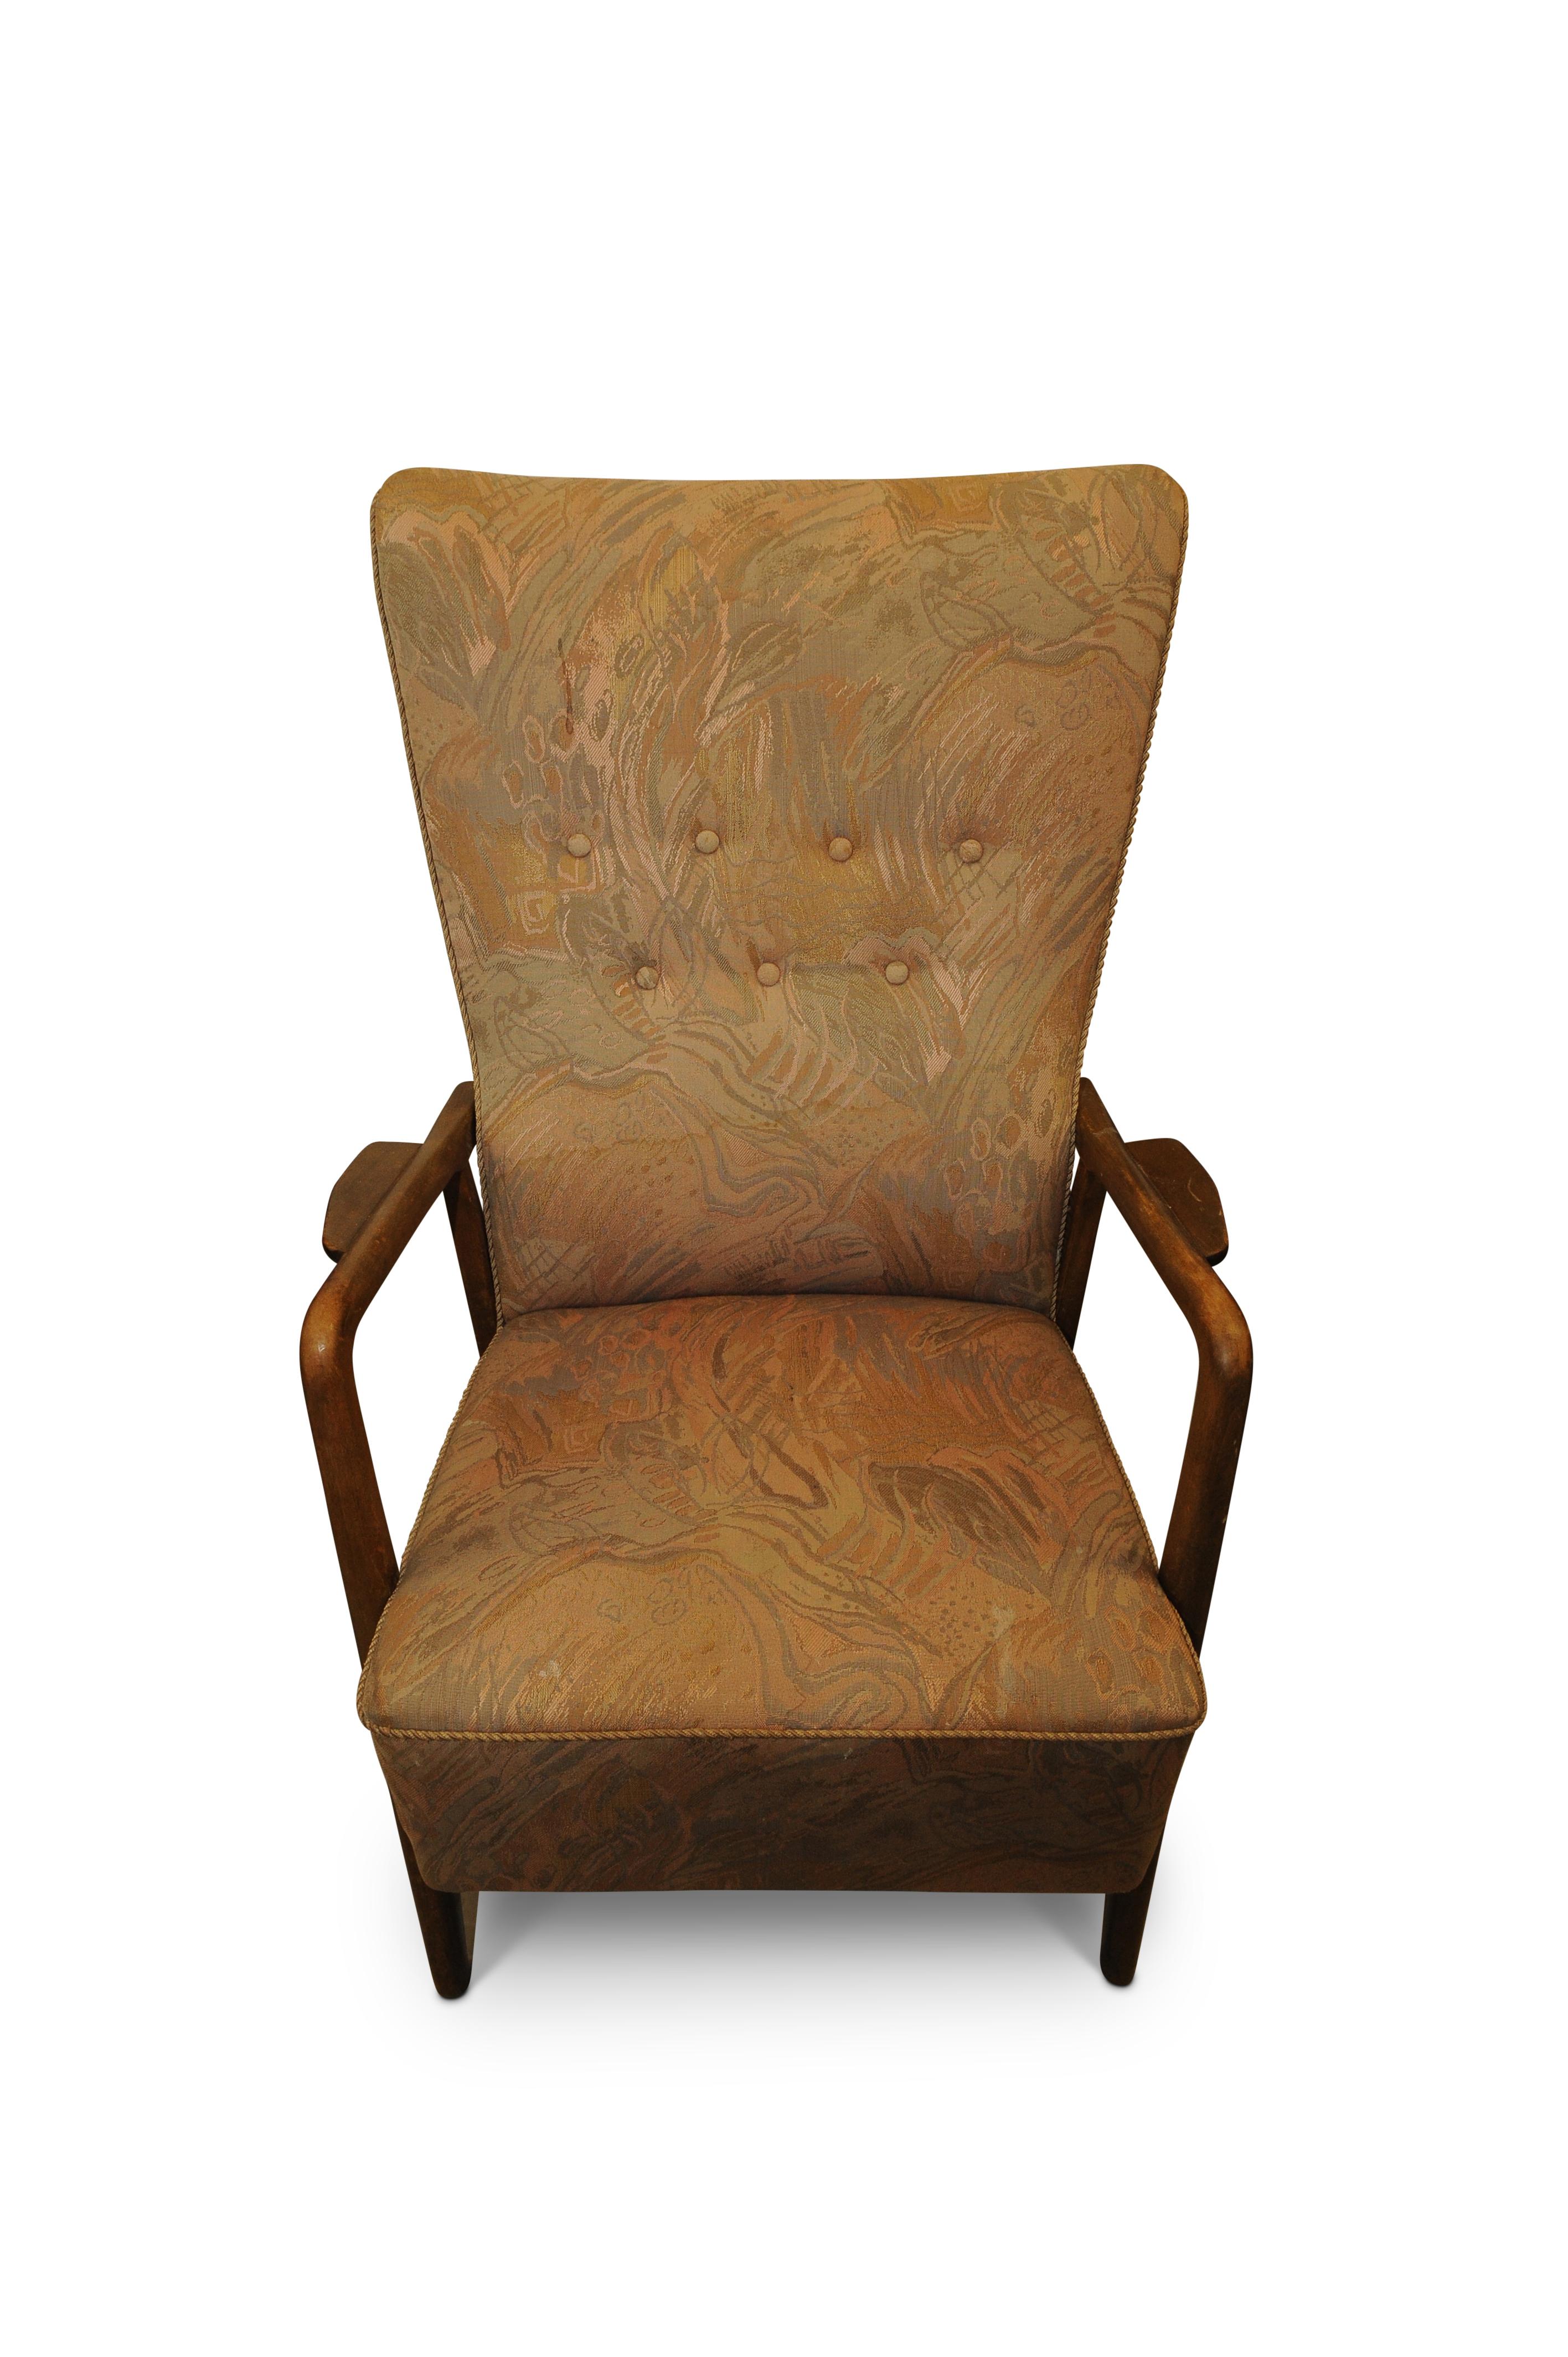 20th Century Folke Ohlsson DUX Scandinavian Mid-Century Modern Armchair Patterned Upholstery For Sale